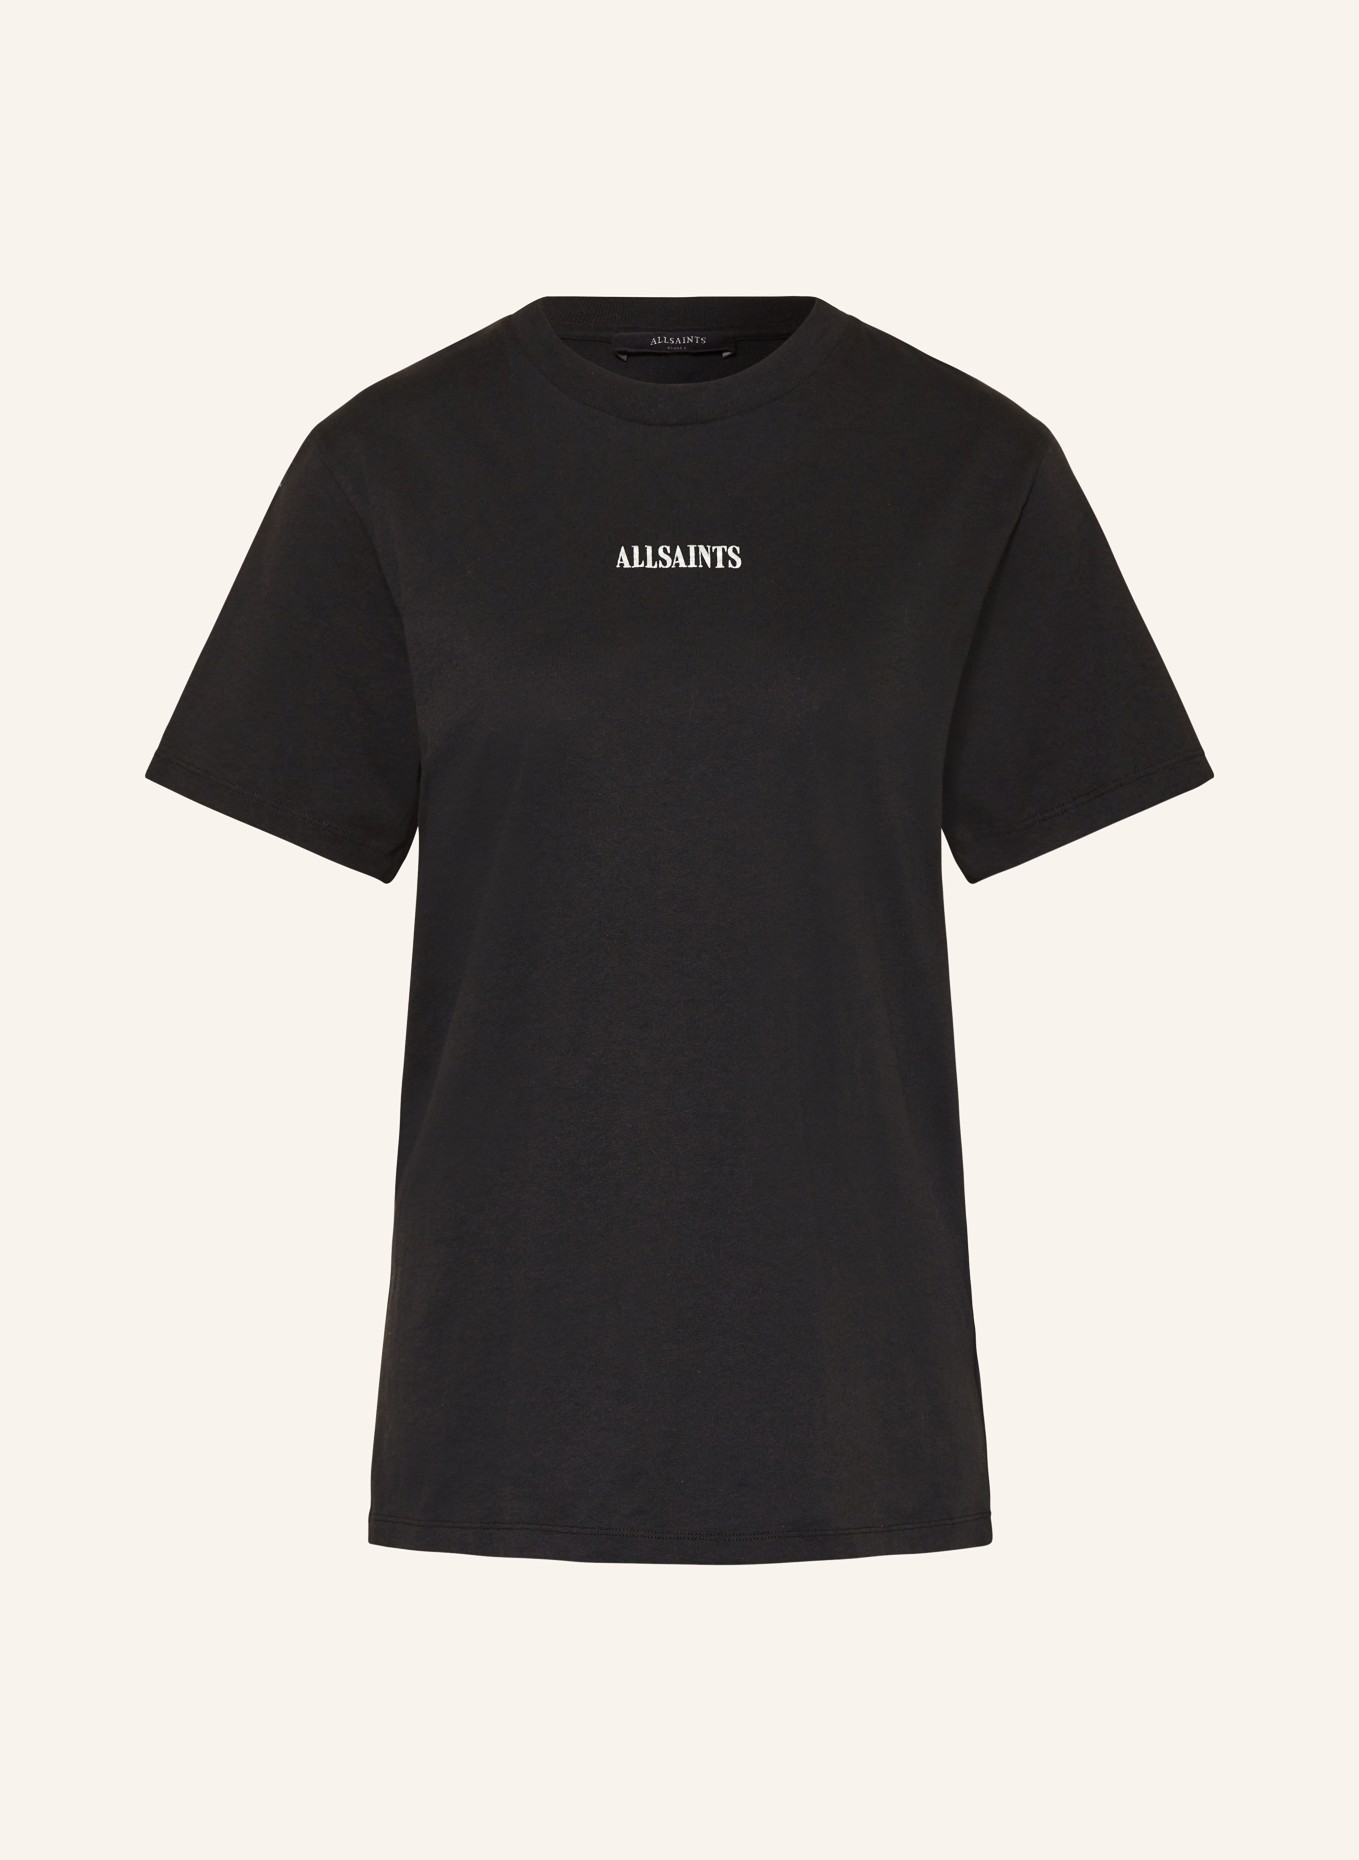 ALLSAINTS T-Shirt FORTUNA, Farbe: SCHWARZ/ SILBER/ GRAU (Bild 1)